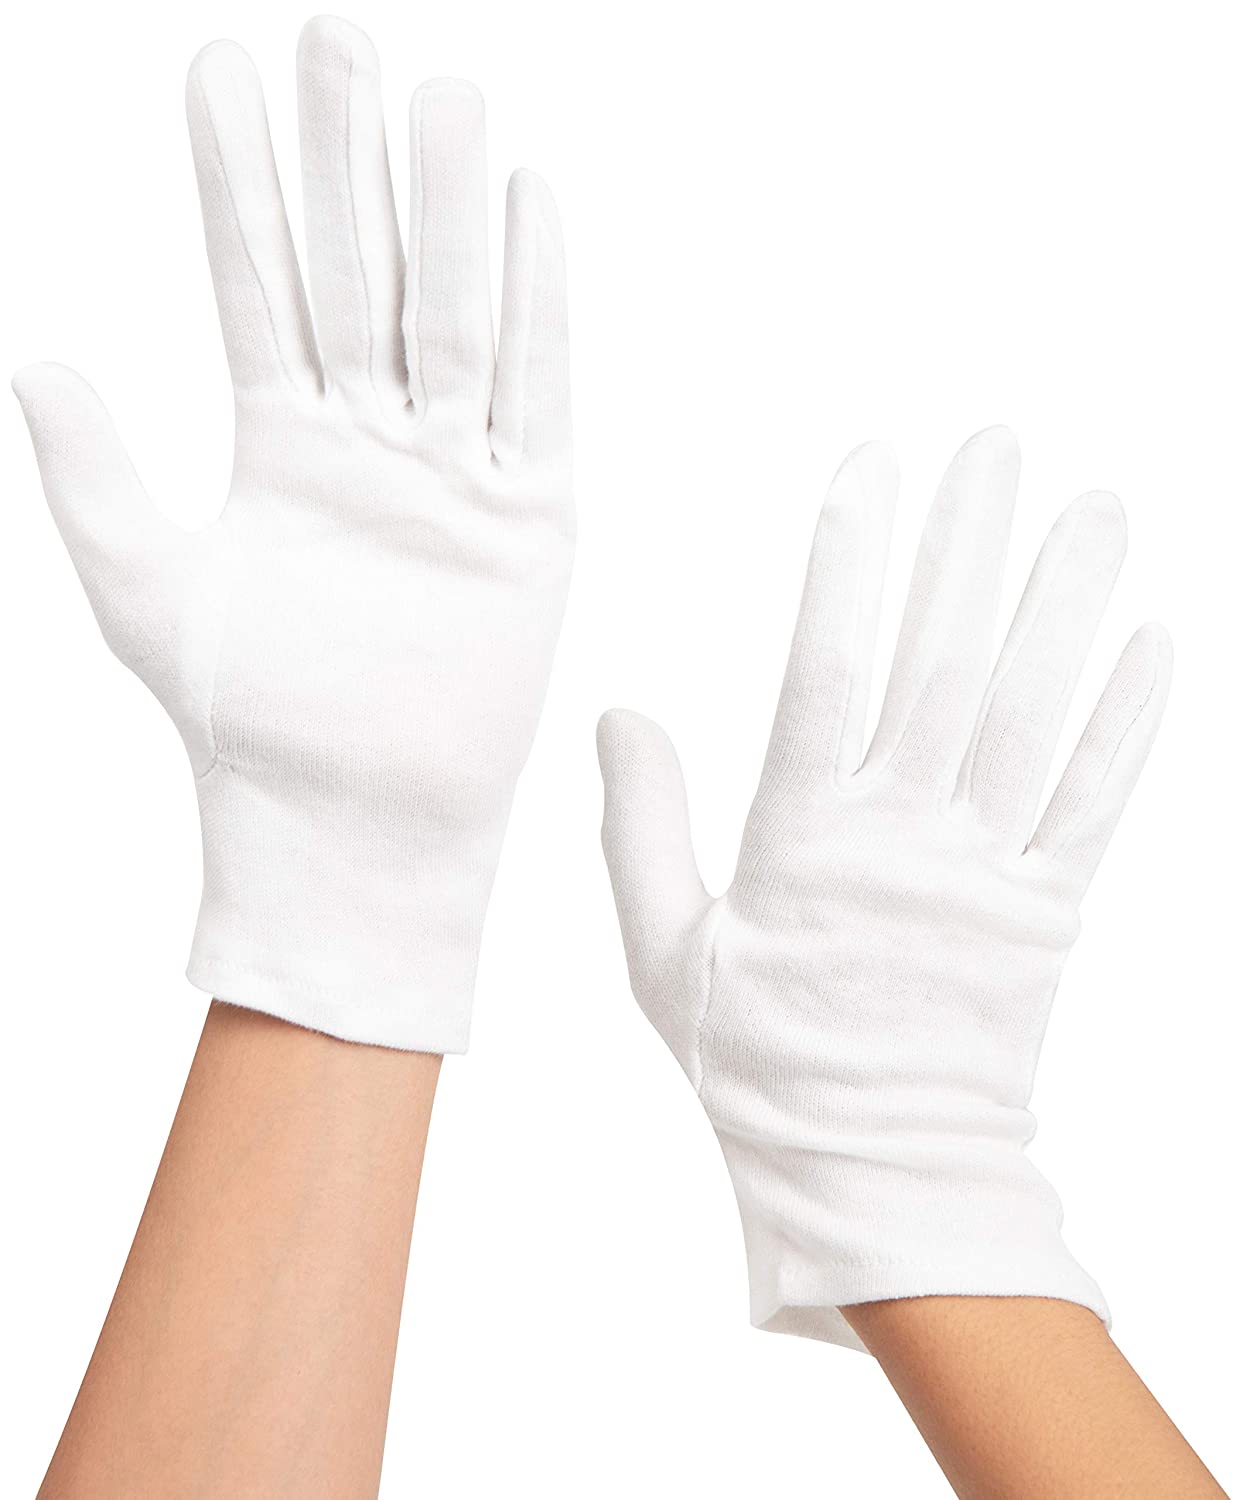 eczema gloves, GOTS certified organic cotton gloves for dry skin, eczema skin, psoriasis skin